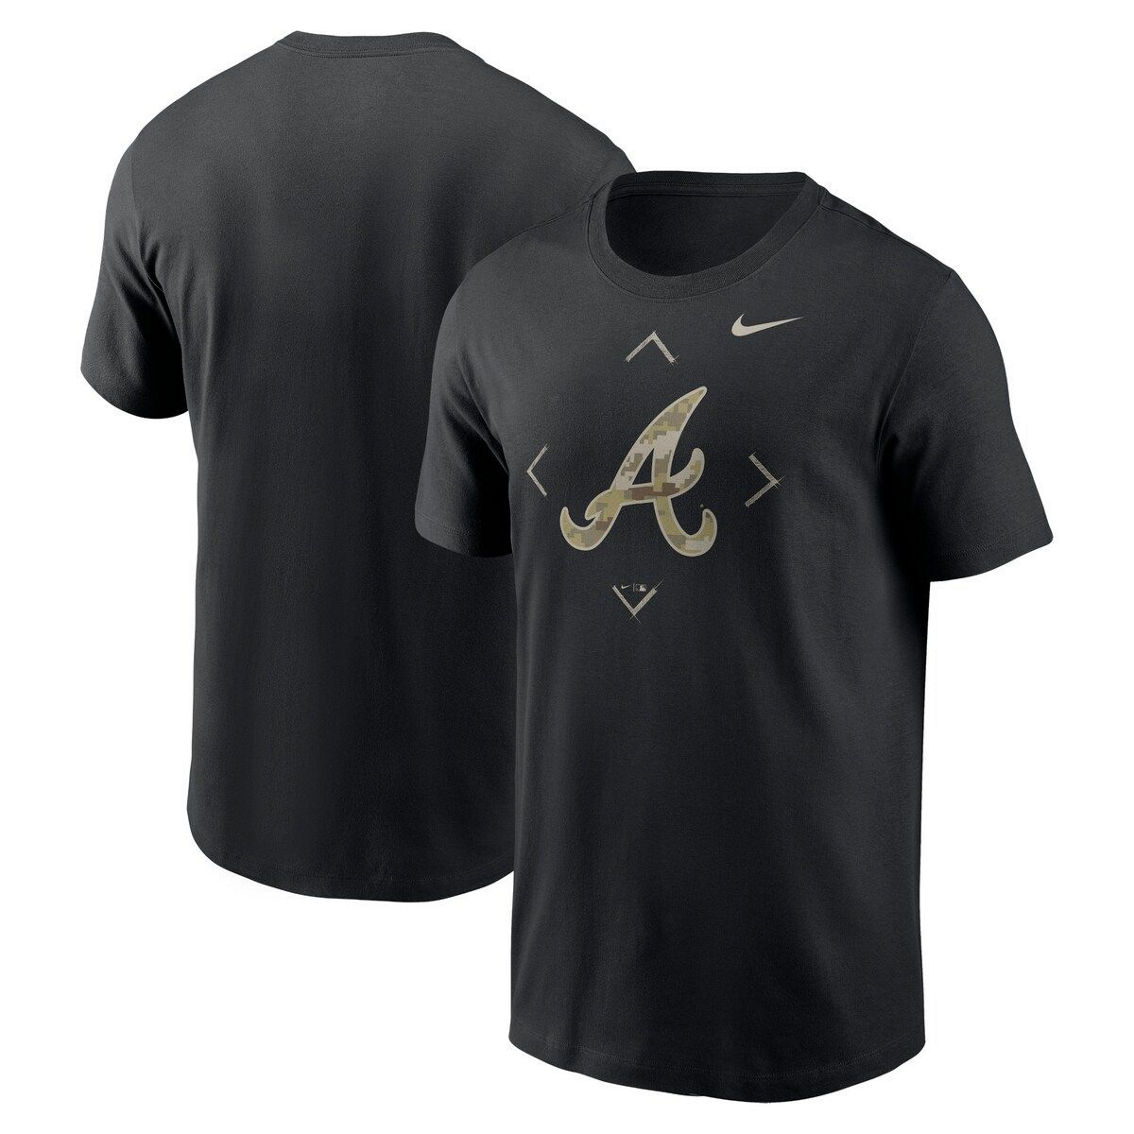 Nike Men's Black Atlanta Braves Camo Logo T-Shirt - Image 2 of 4